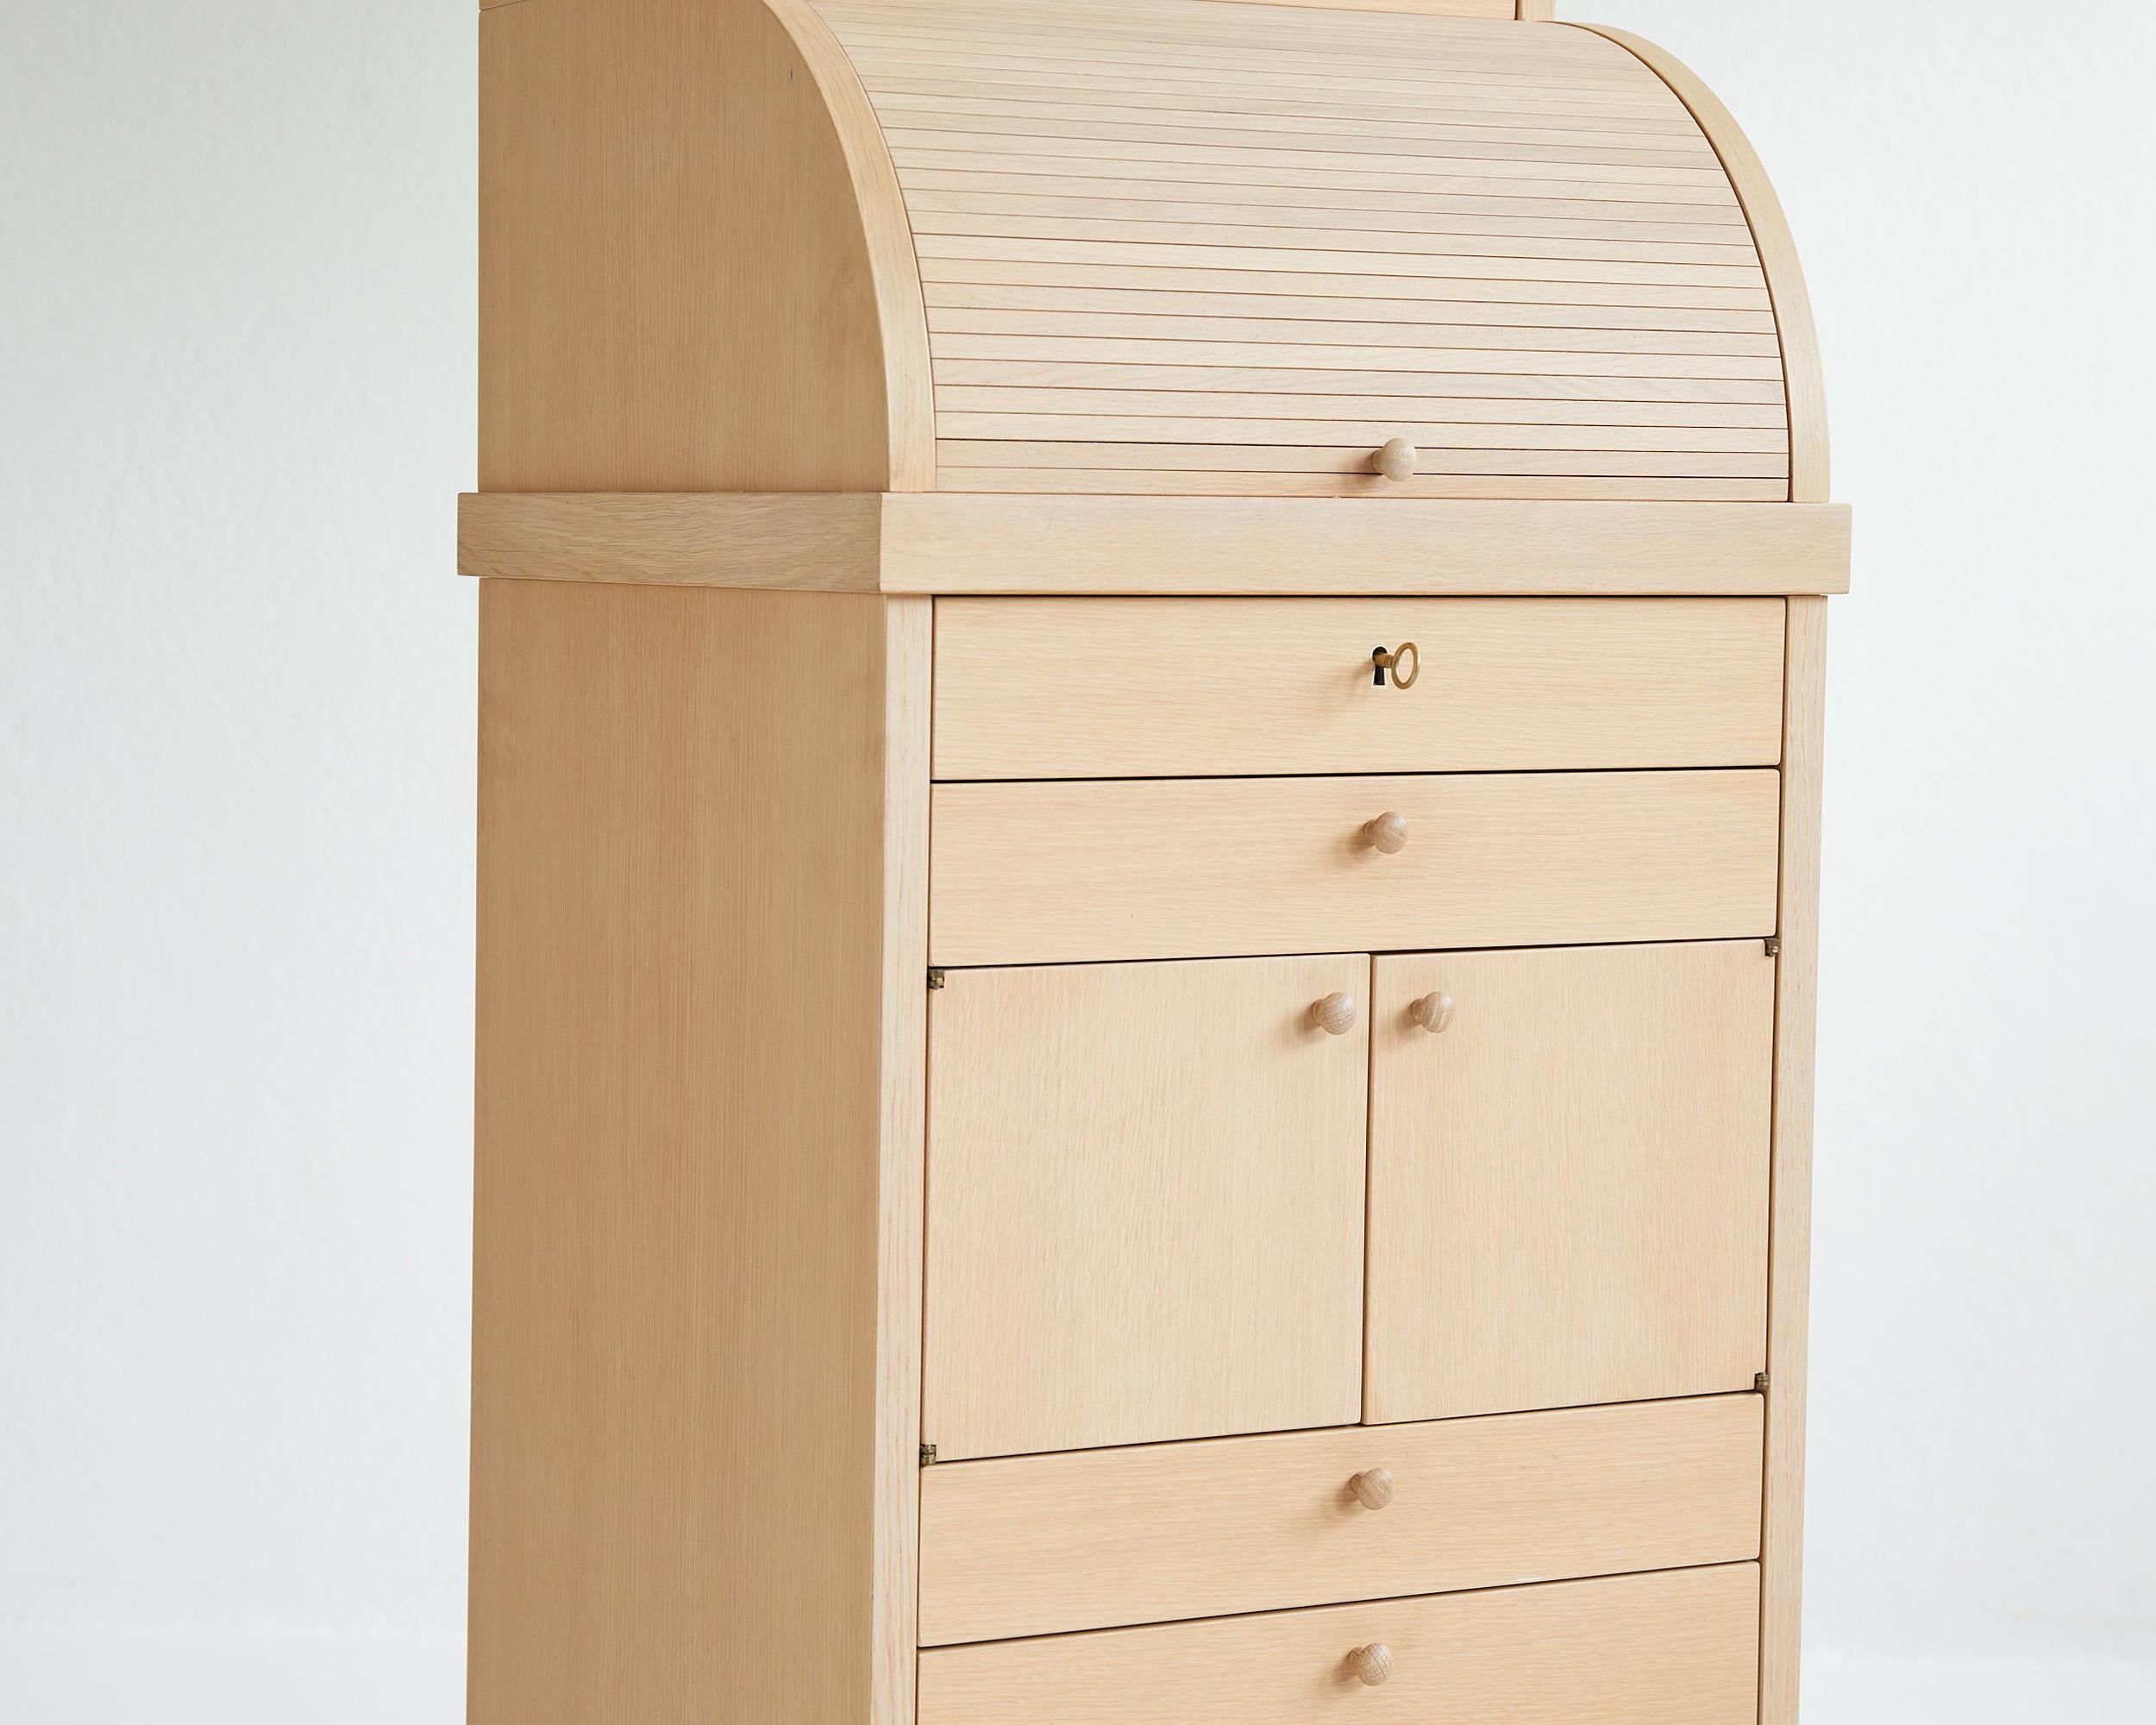 Mid-Century Modern Carteggio Wood Drawer Cabinet by Aldo Rossi for Molteni Italy, 1987